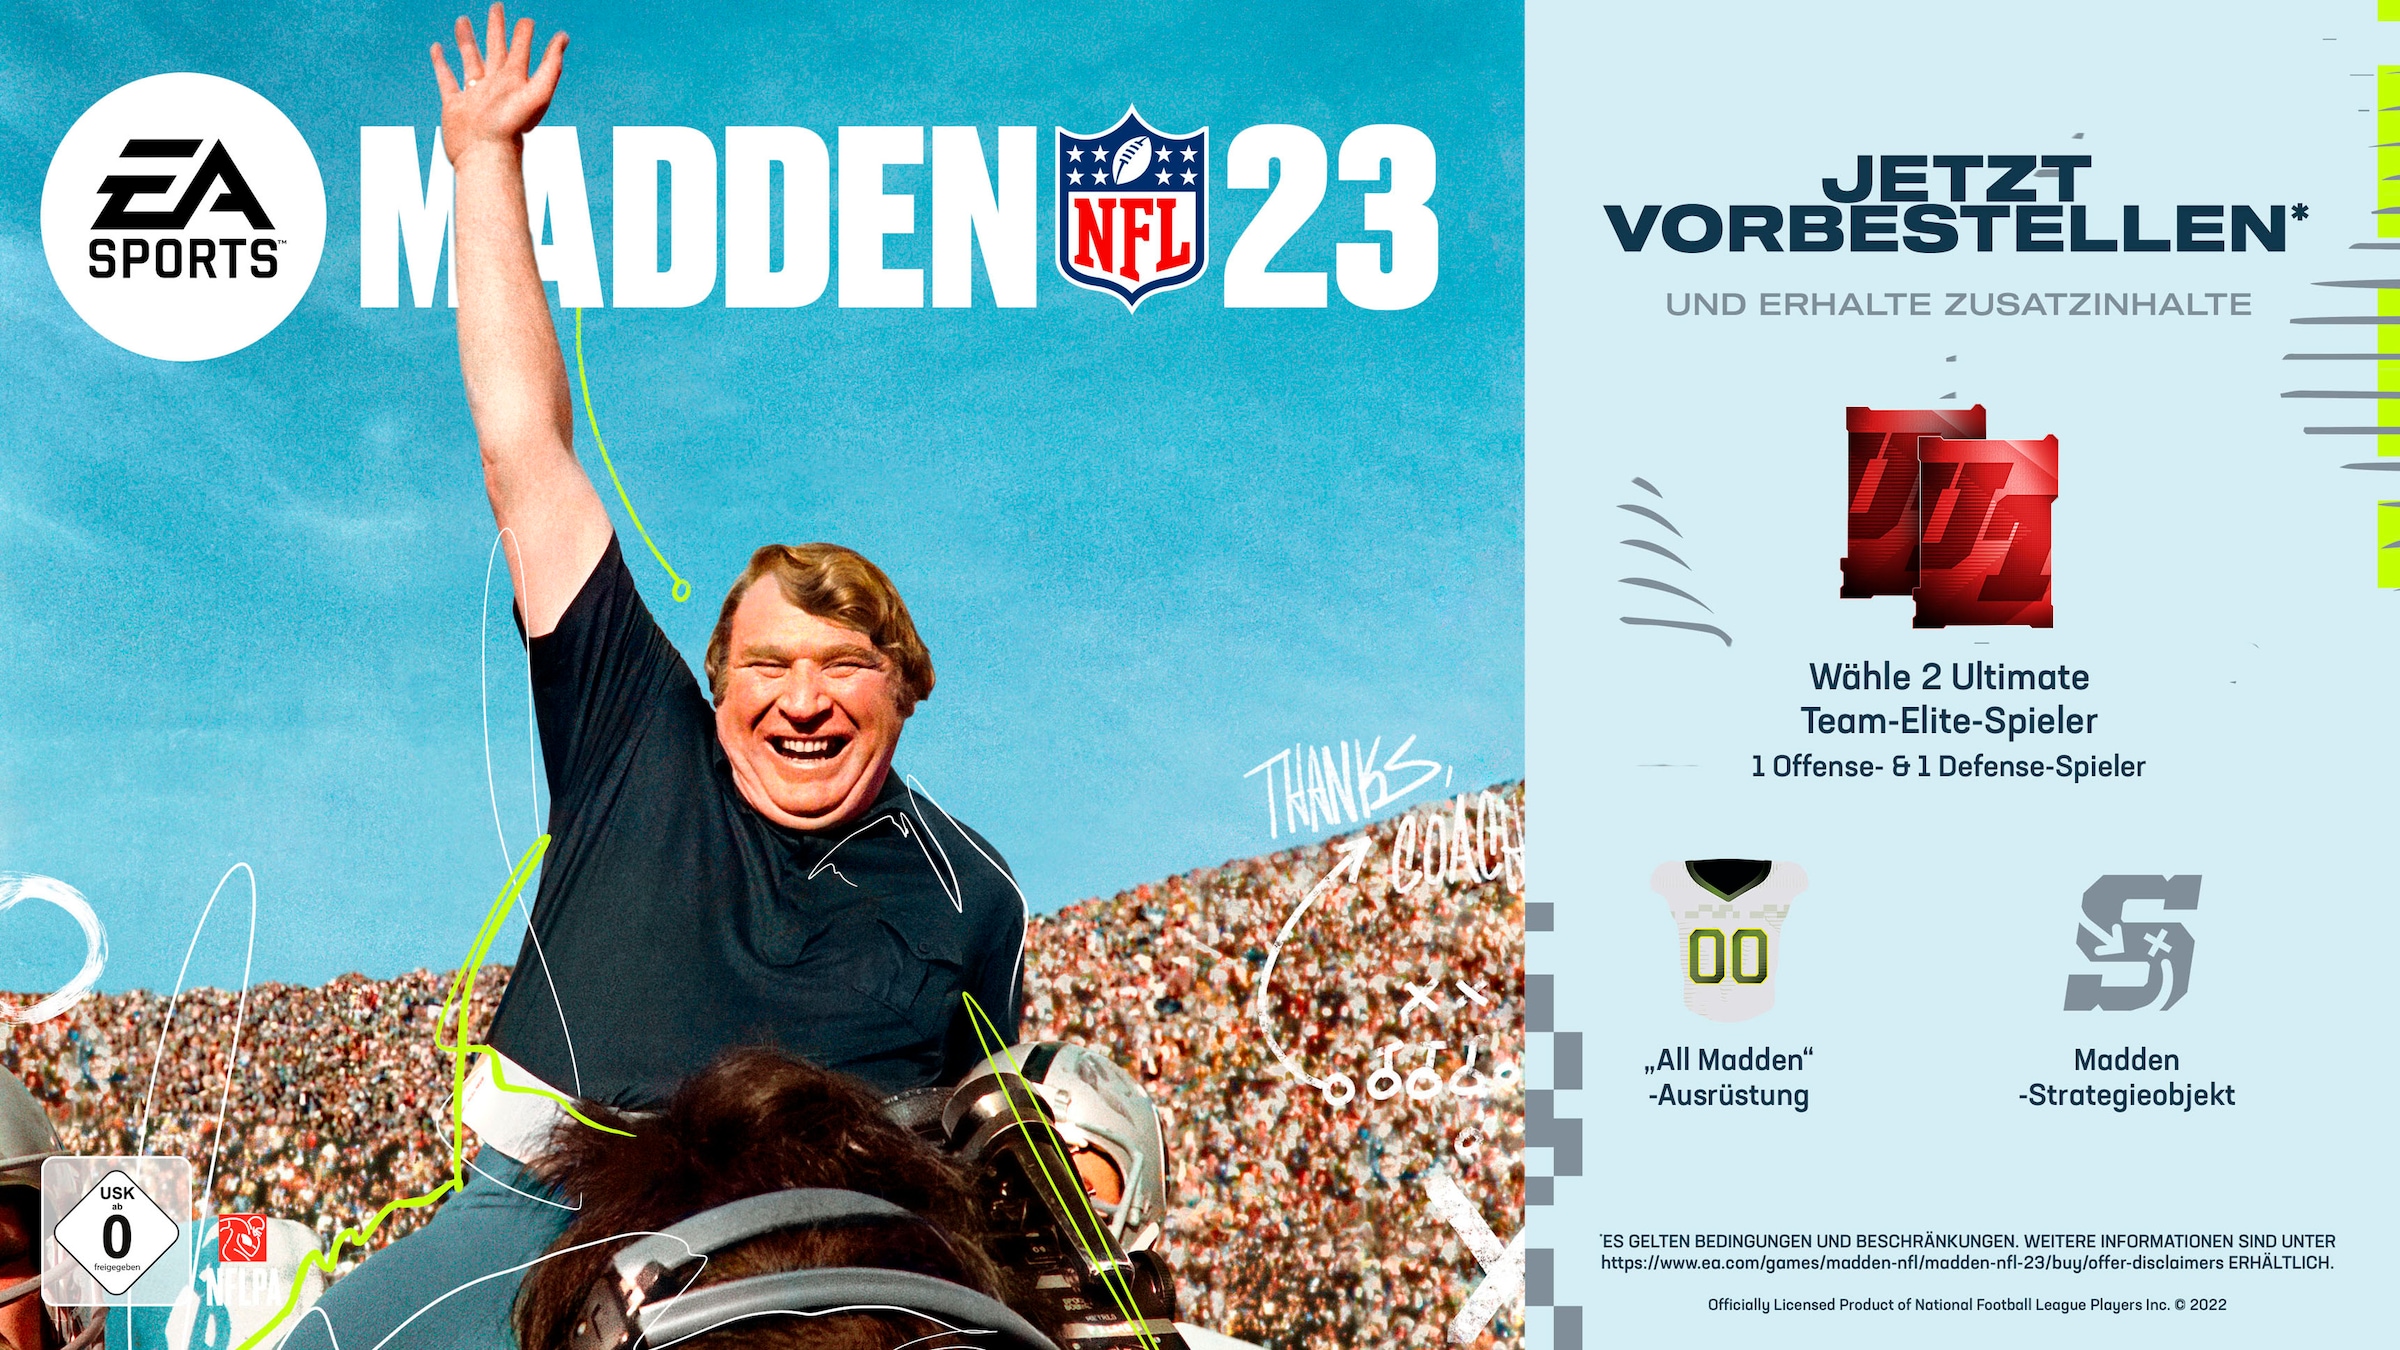 Electronic Arts Spielesoftware »Madden NFL 23«, Xbox Series X-Xbox Series X